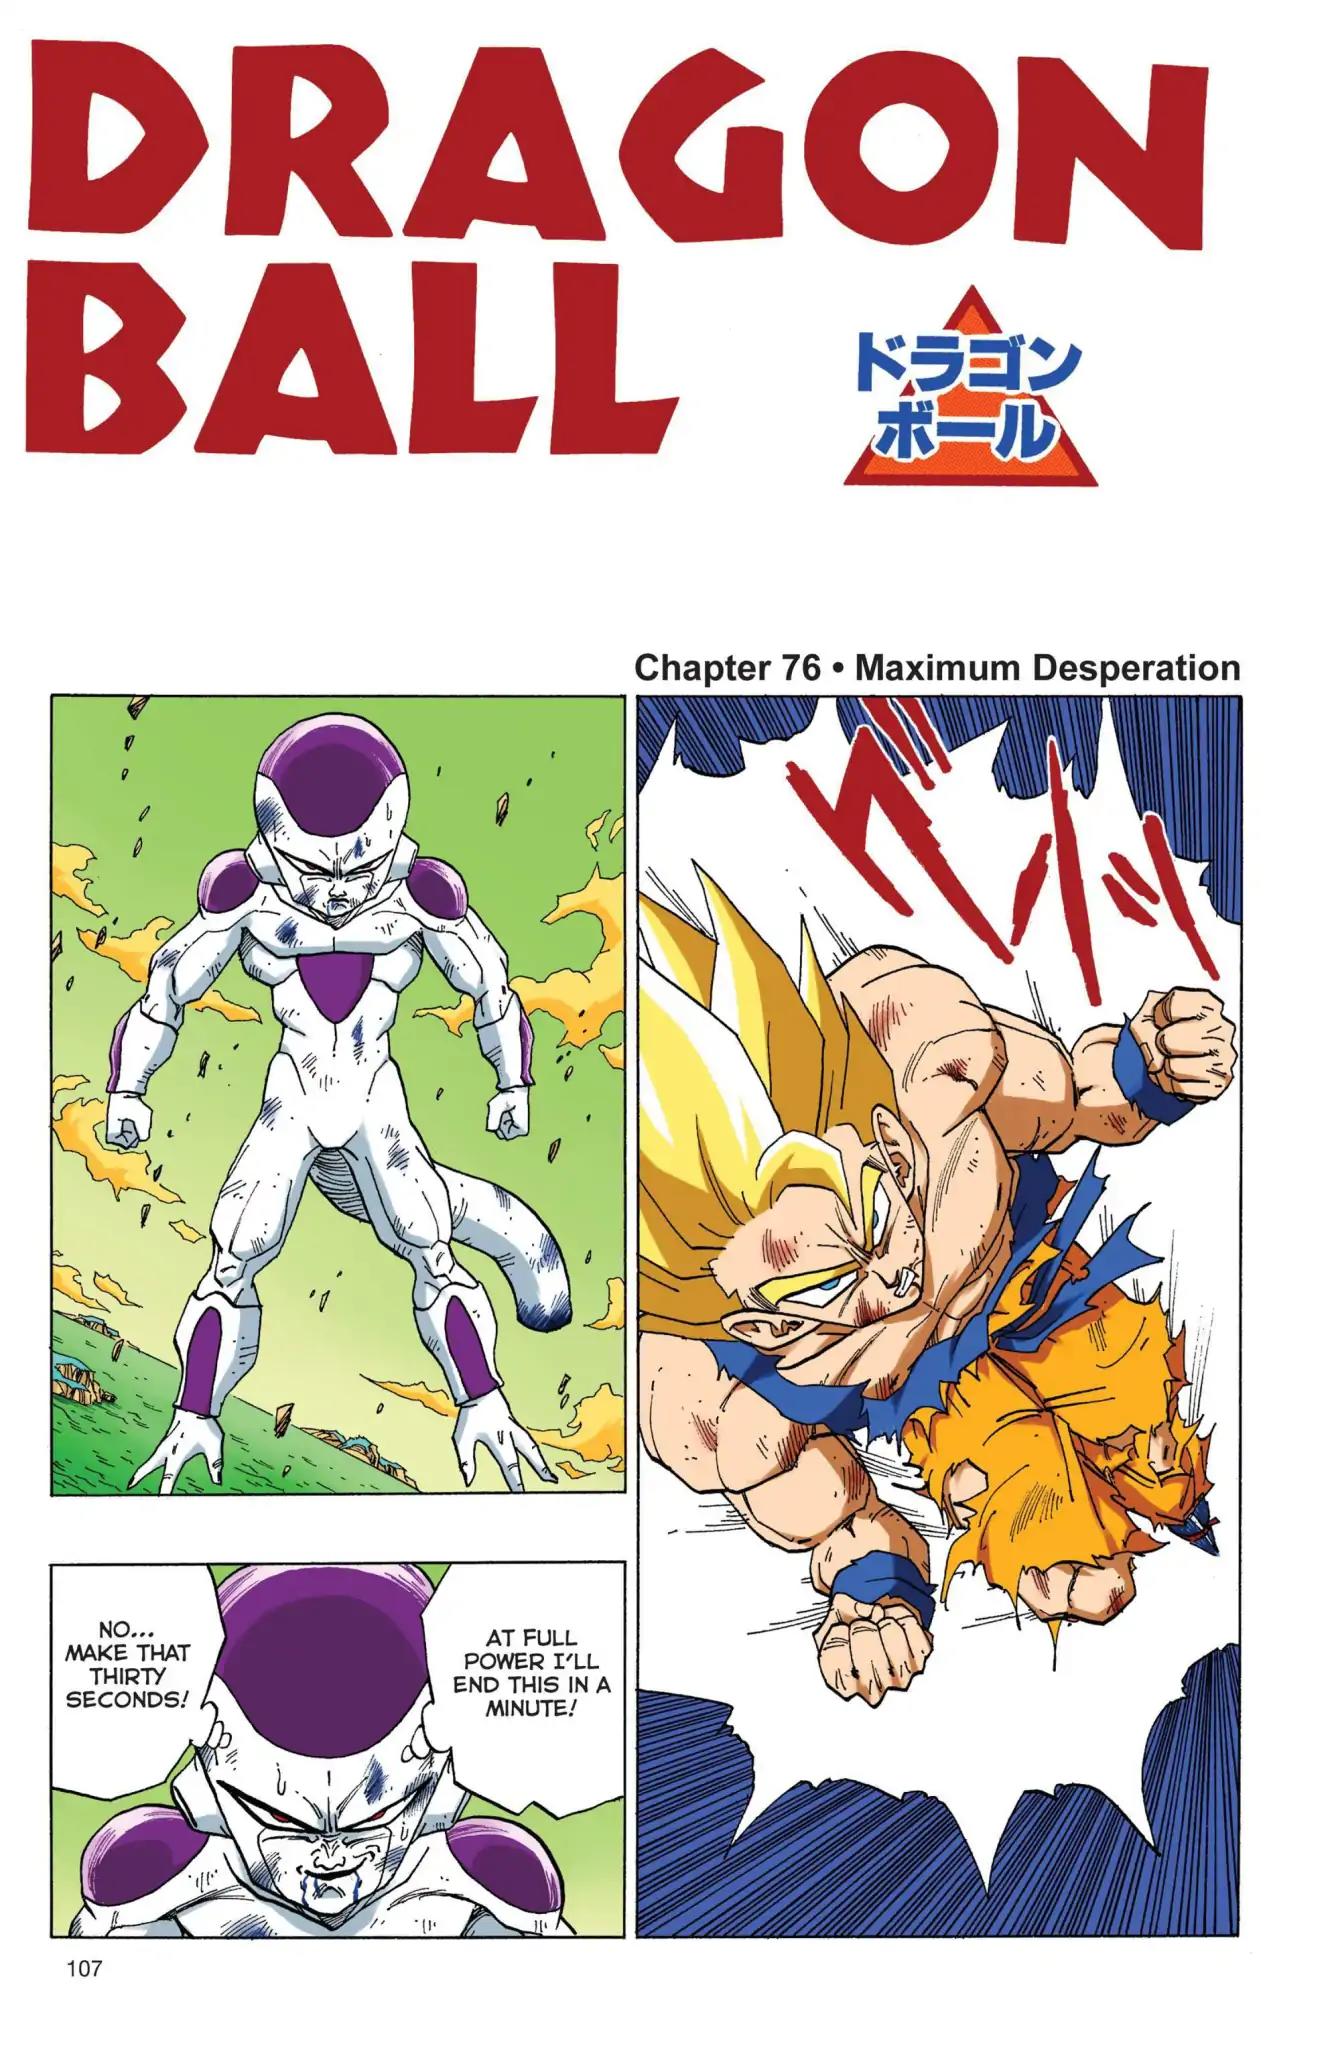 Dragon Ball Full Color Freeza Arc Vol.5 Chapter 076: